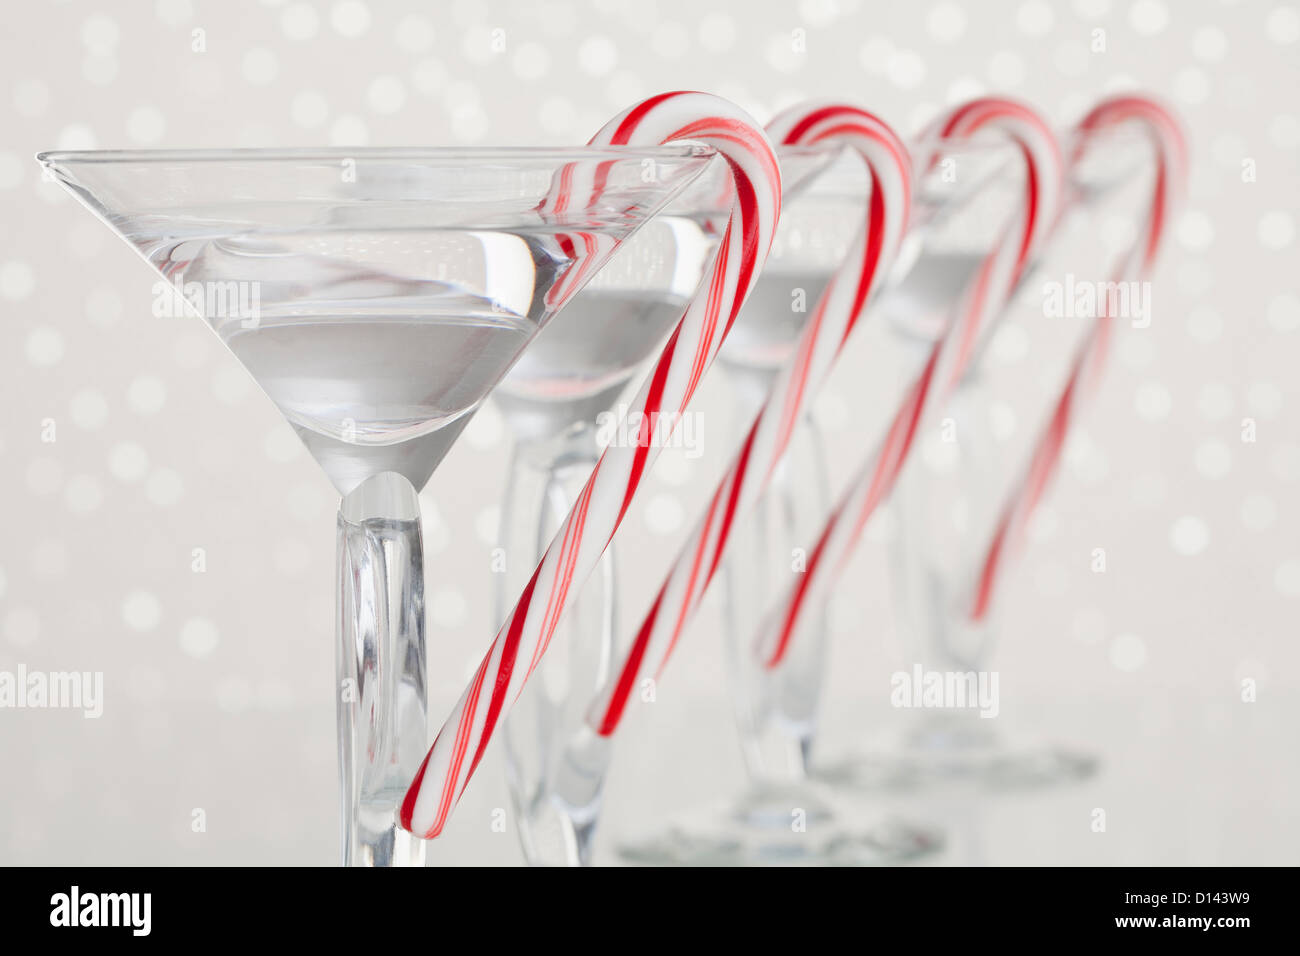 USA, Illinois, Metamora, Martini glasses with candies inside against  illuminated Christmas tree Stock Photo - Alamy